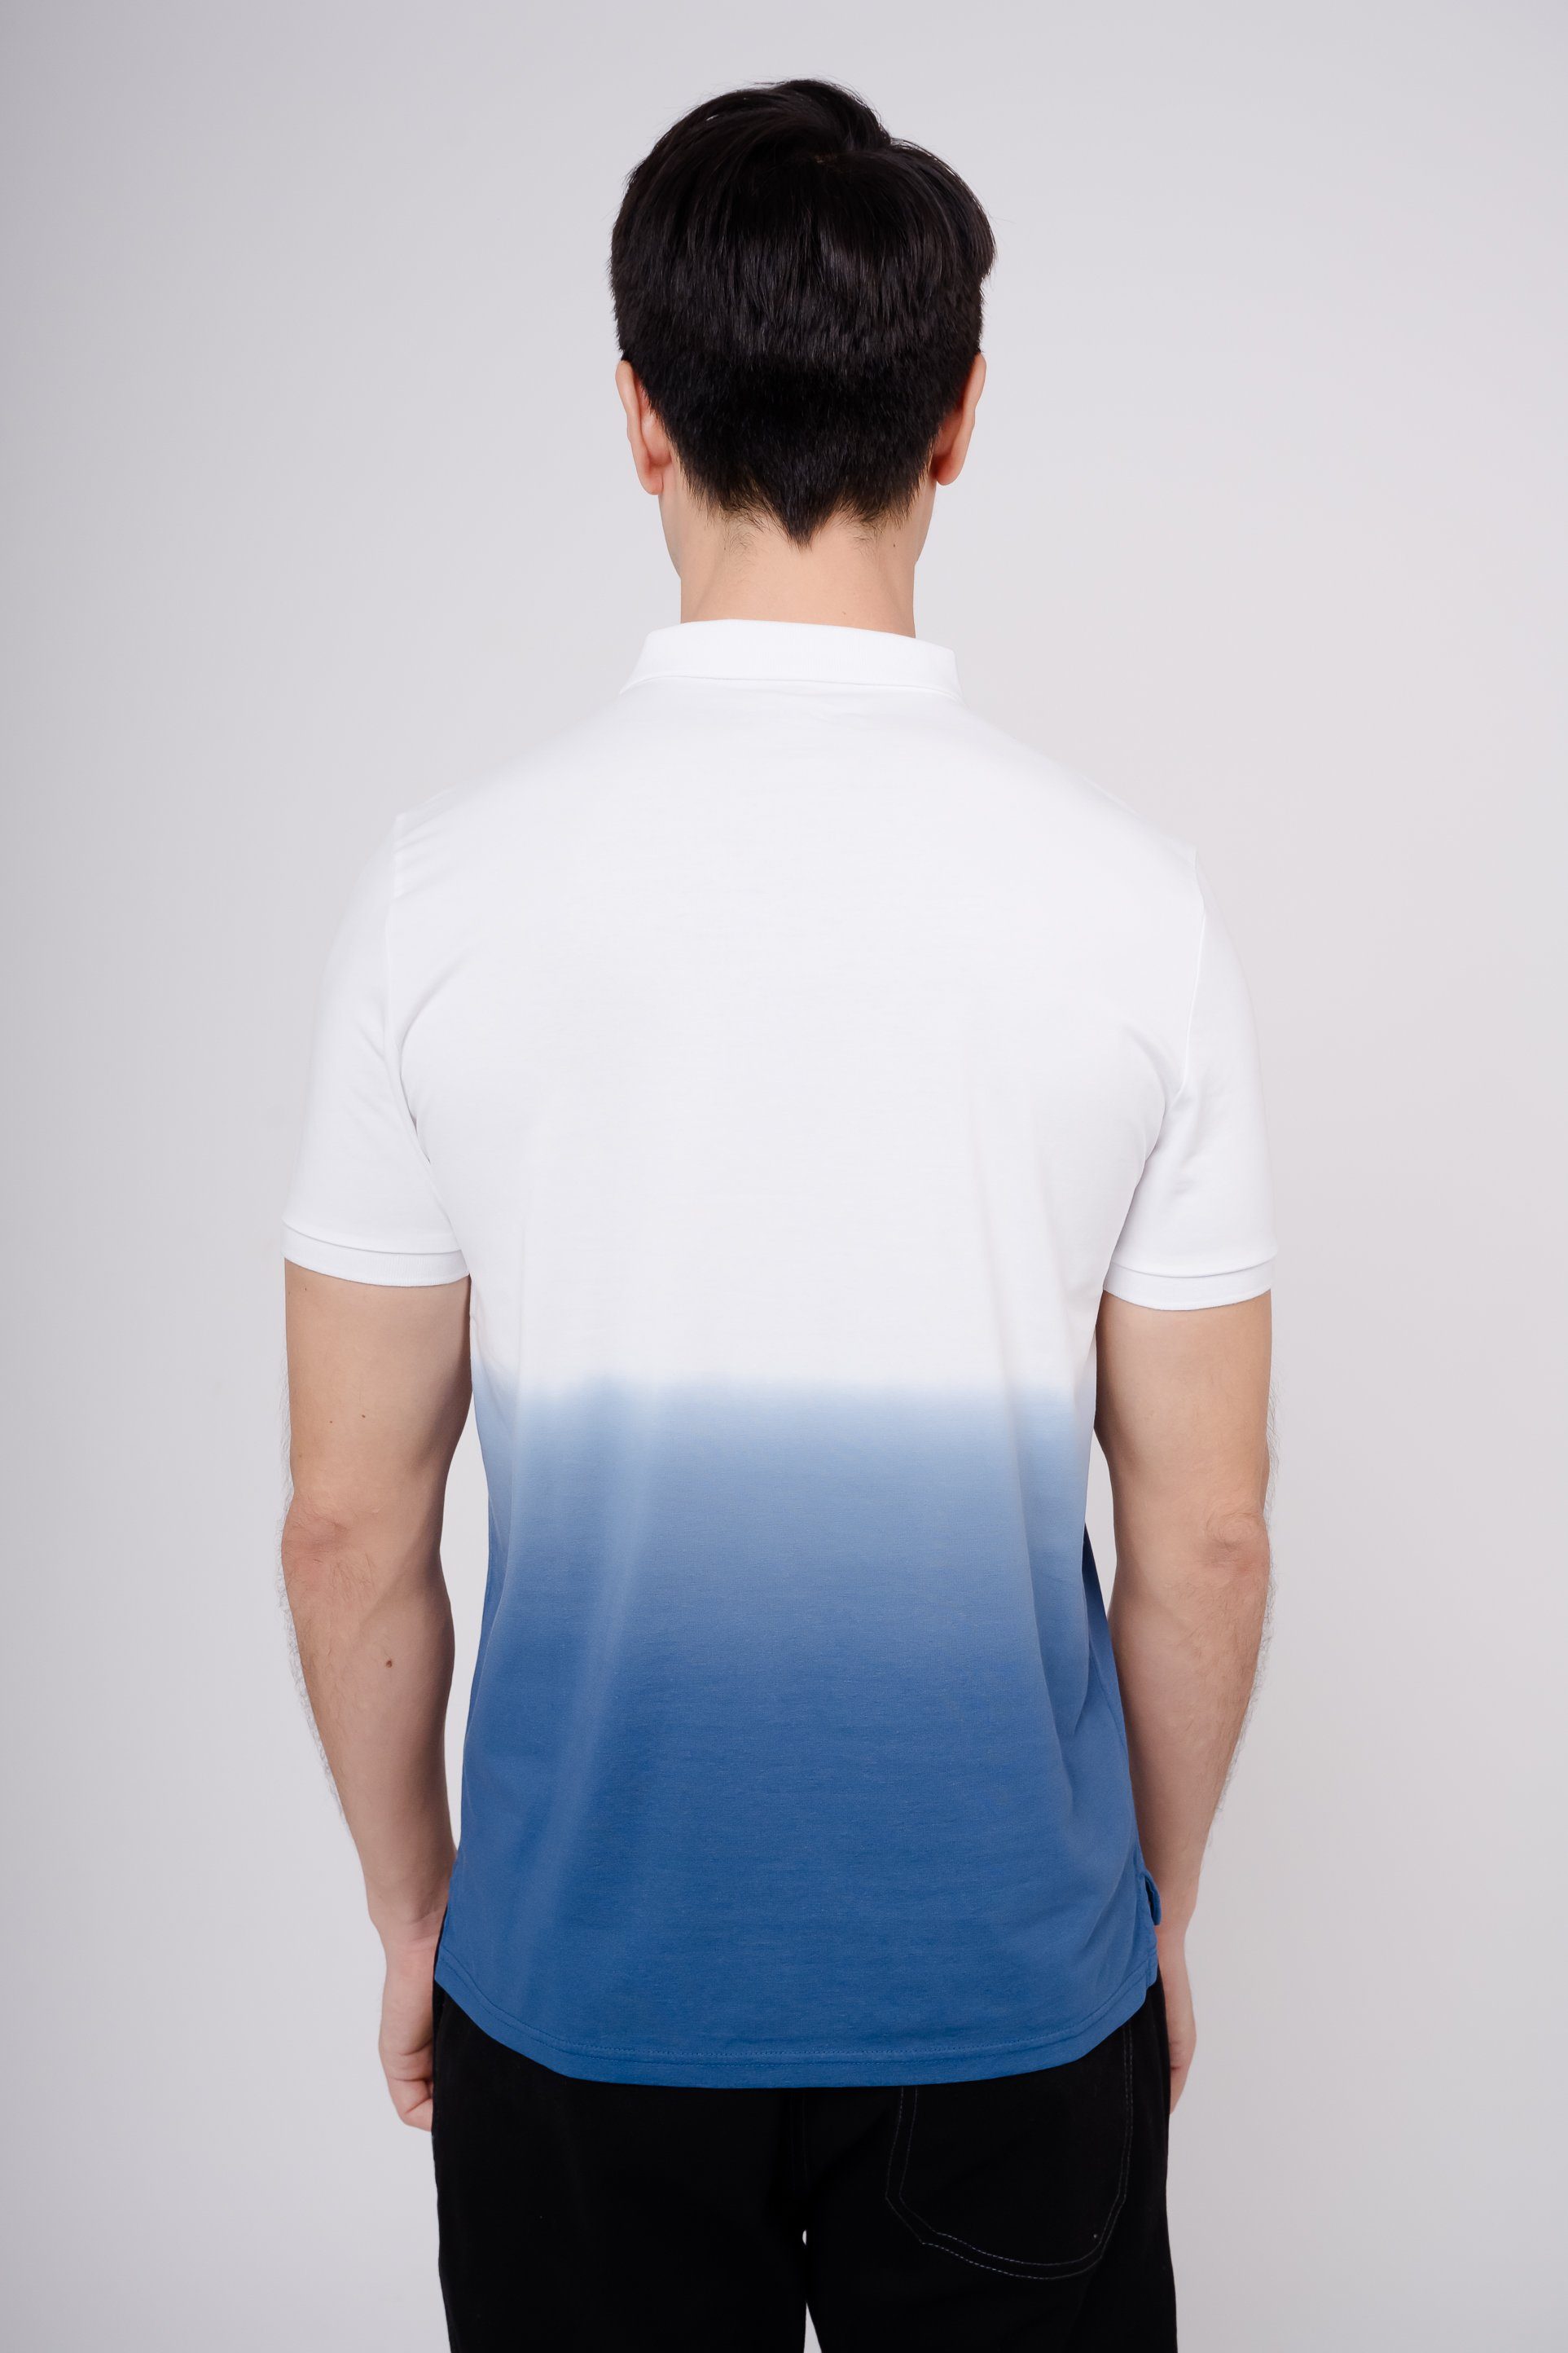 mit GIORDANO Poloshirt Dye-Effekt blau-weiß Dip